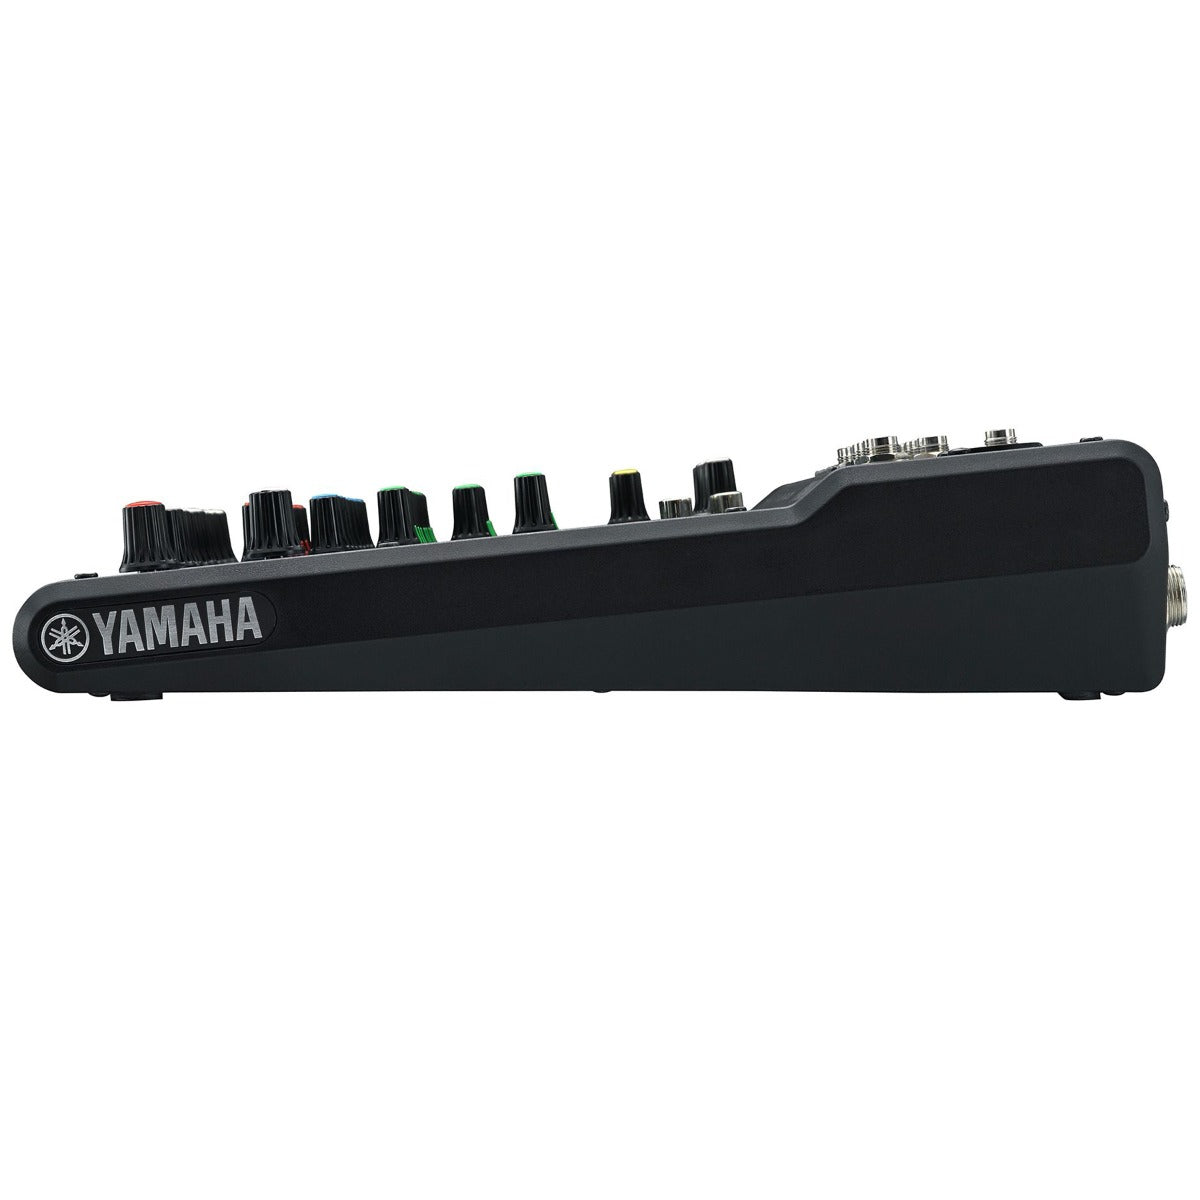 Yamaha MG10 10-Channel Compact Stereo Mixer view 3